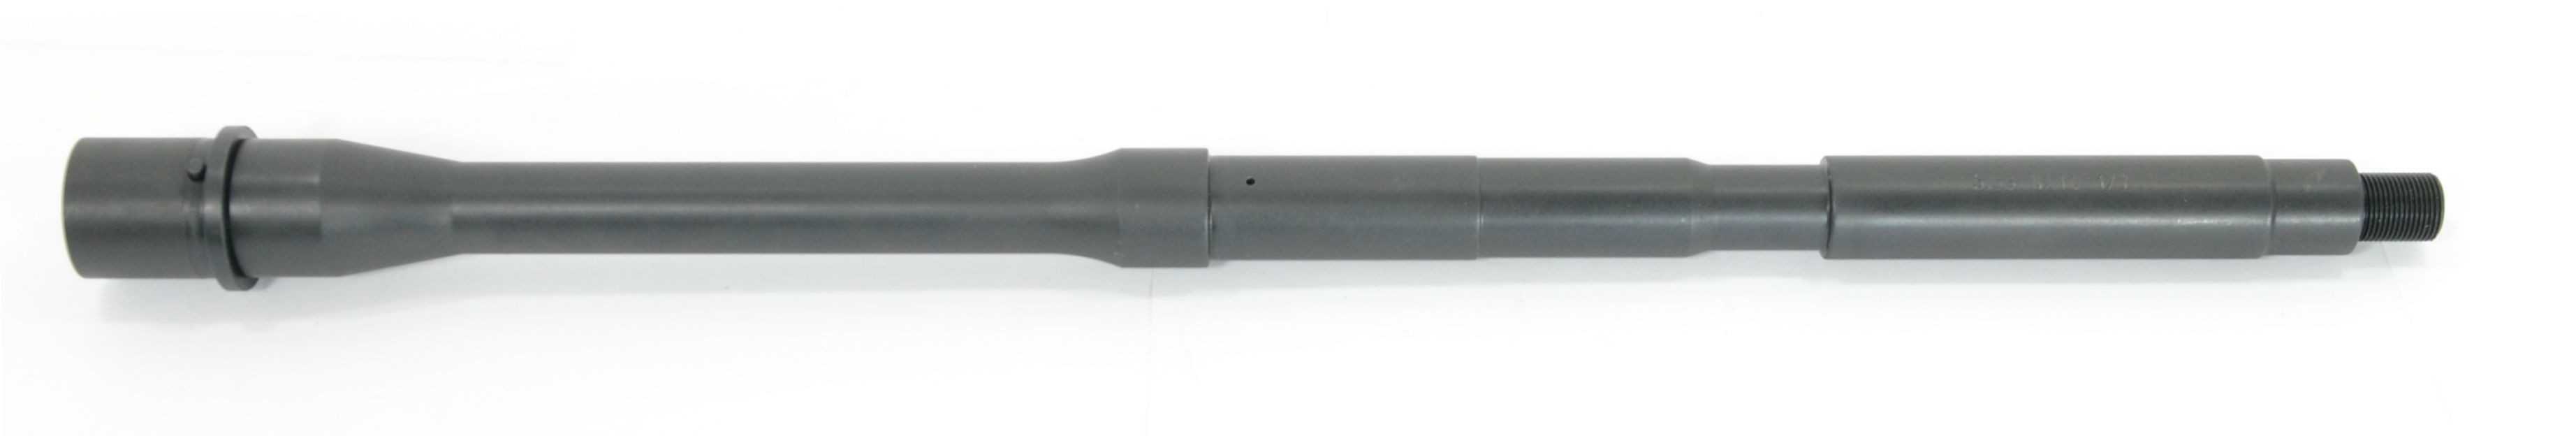 PSA AR15 16" M4 5.56 NATO 1:7 Nitride Barrel - 7782495